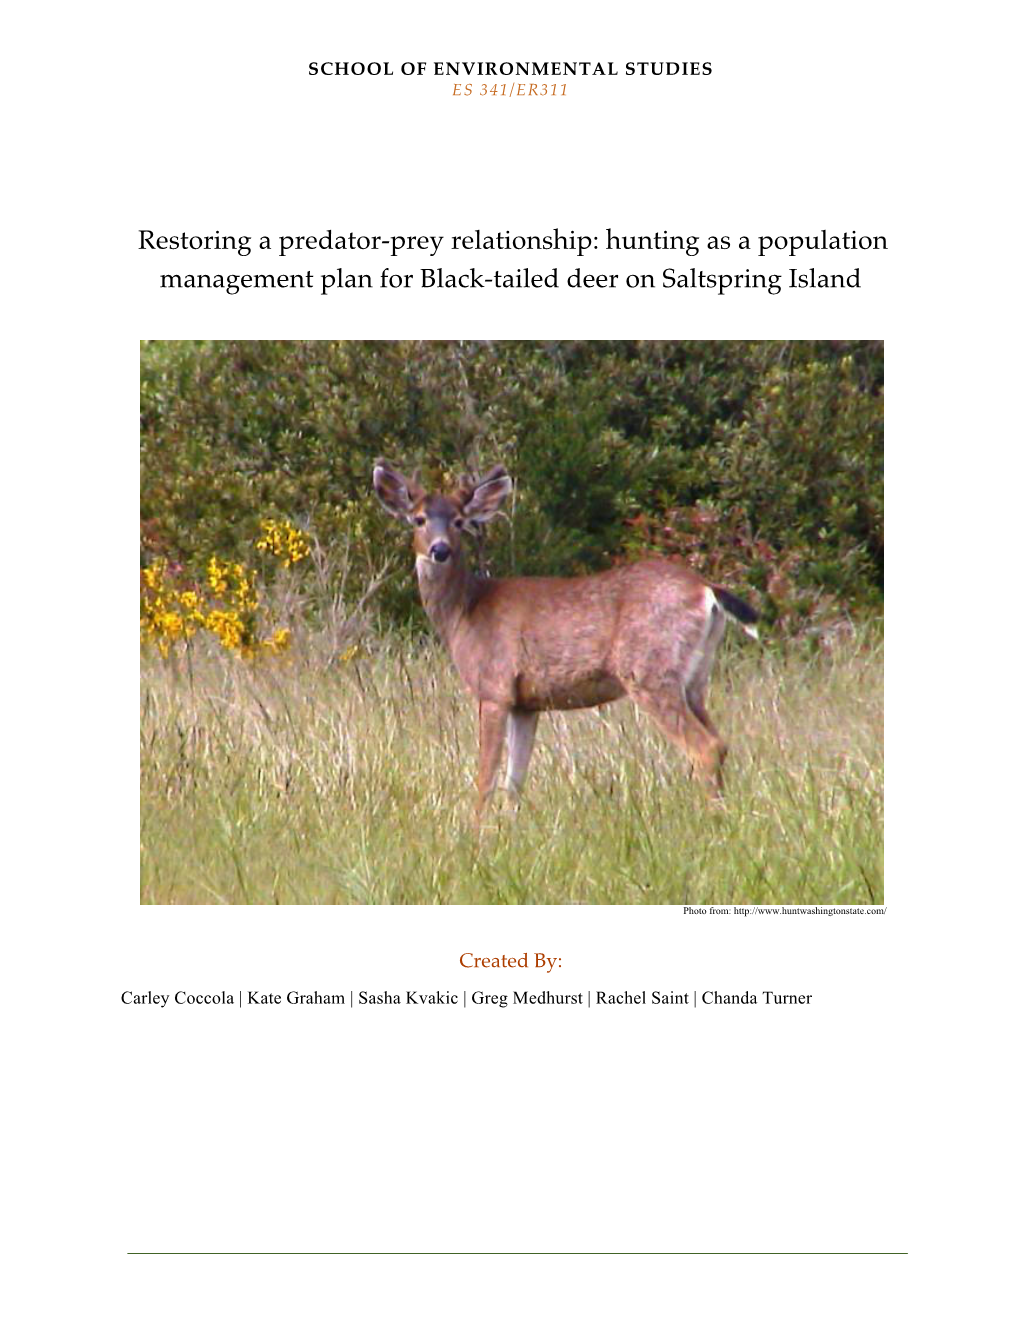 Hunting As a Population Management Plan for Black-Tailed Deer on Saltspring Island